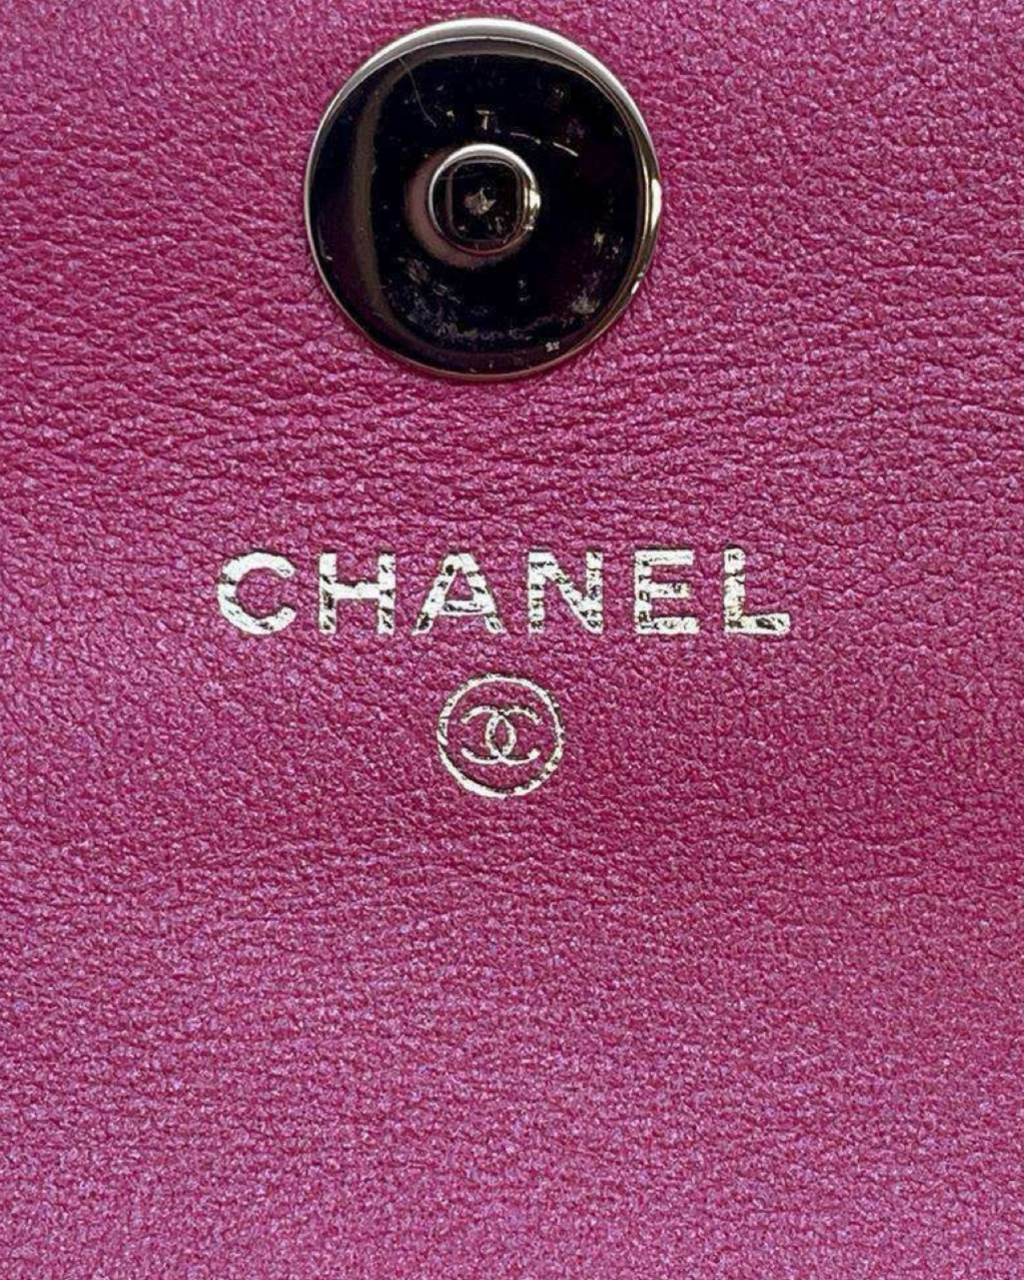 Bolsa Chanel Mini Pouch